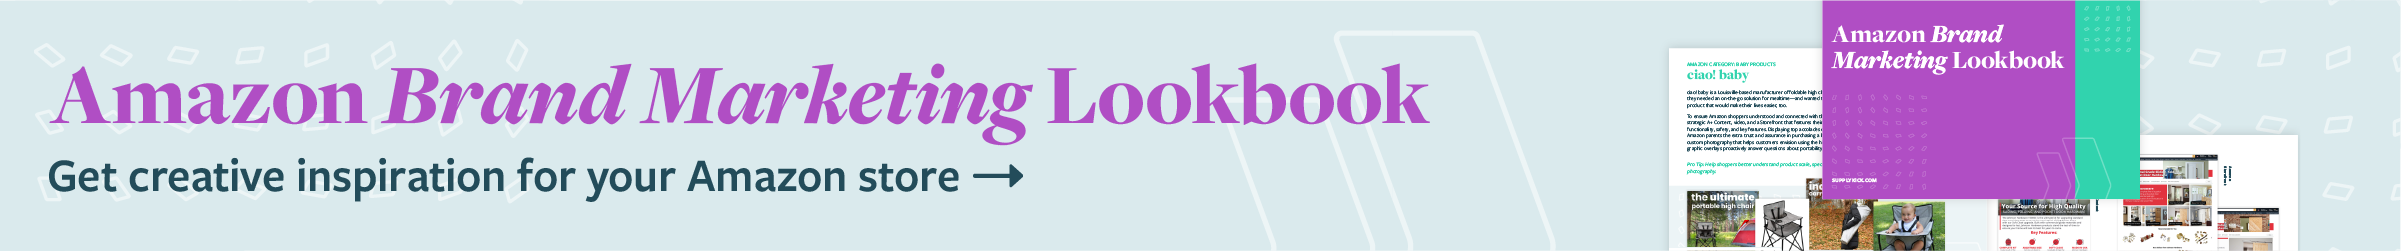 Amazon Brand Marketing Lookbook: Get creative inspiration for your Amazon store